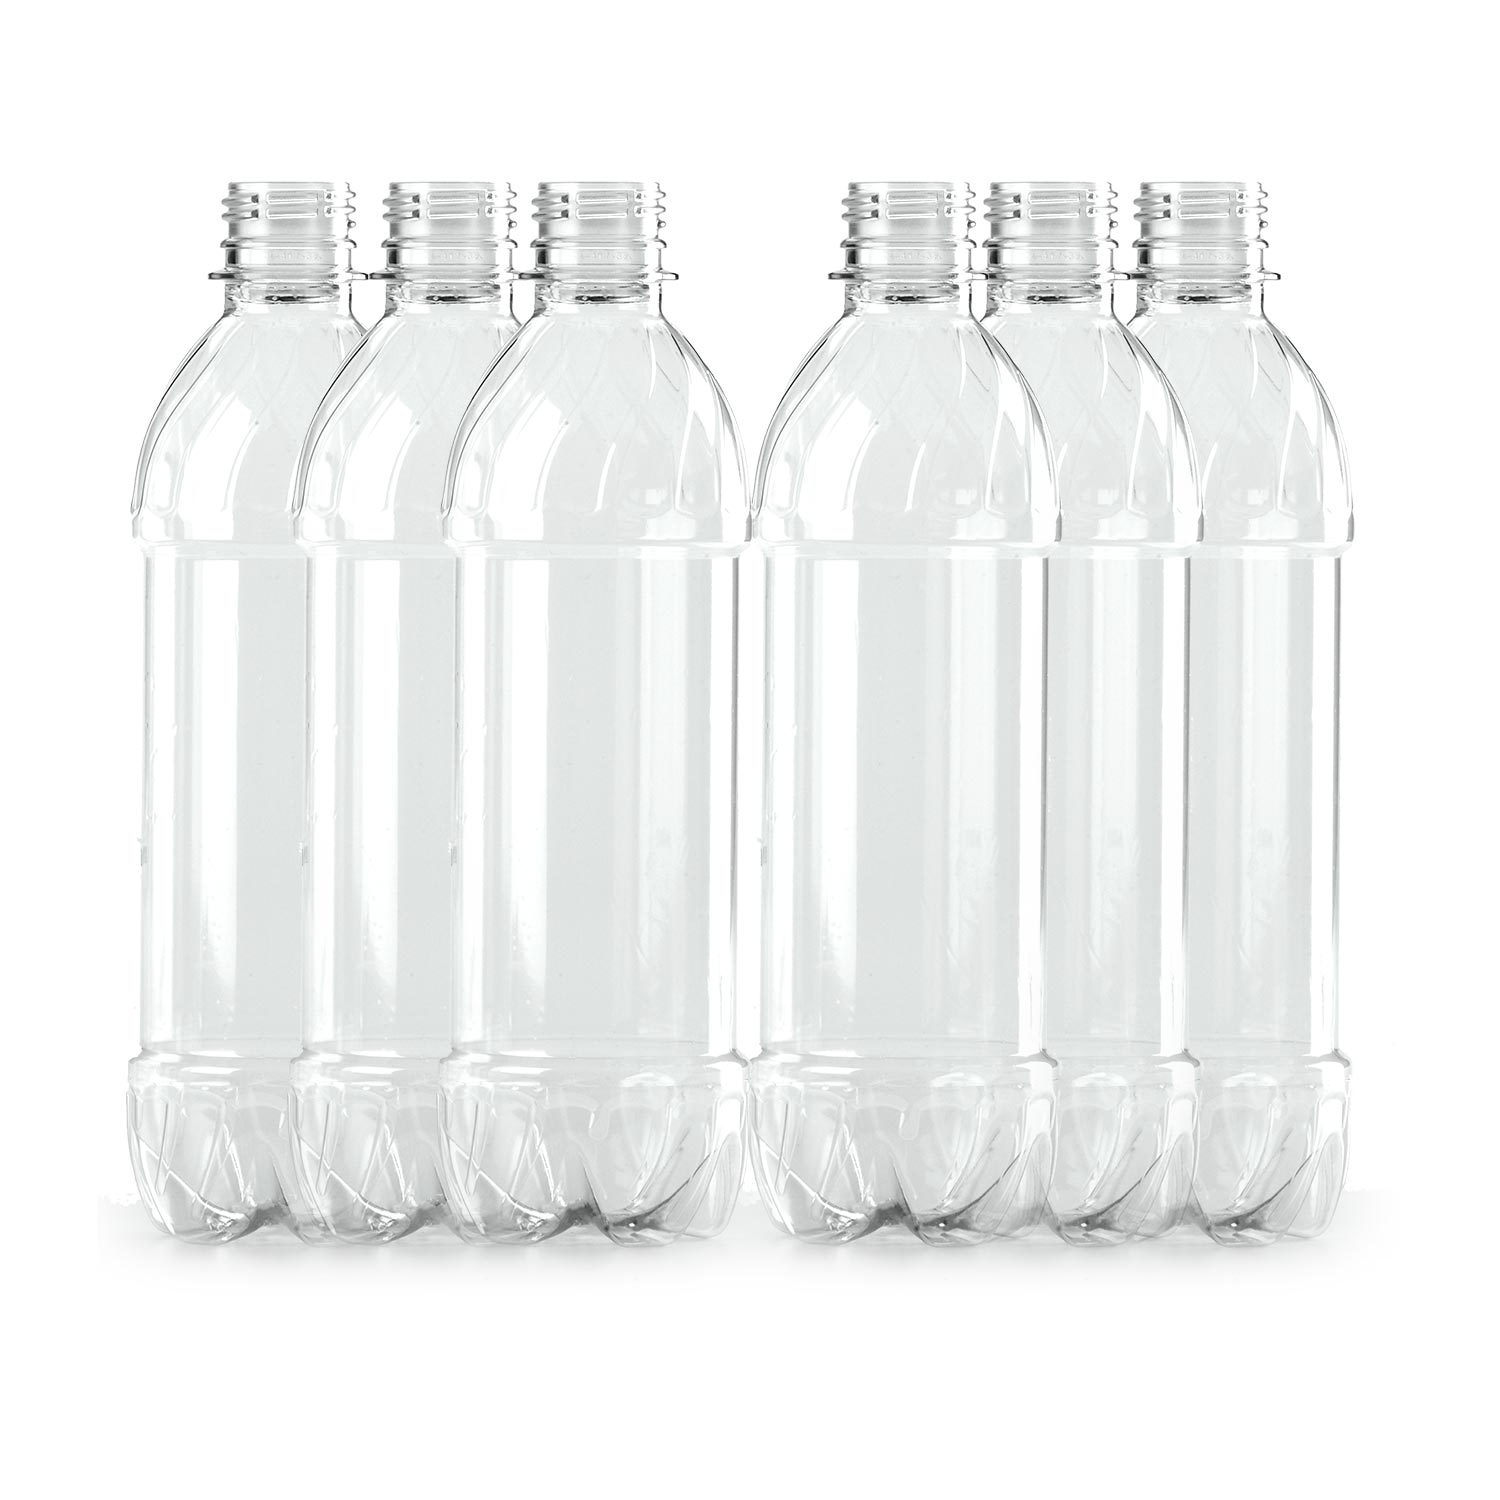 Bottles - 16 ounce